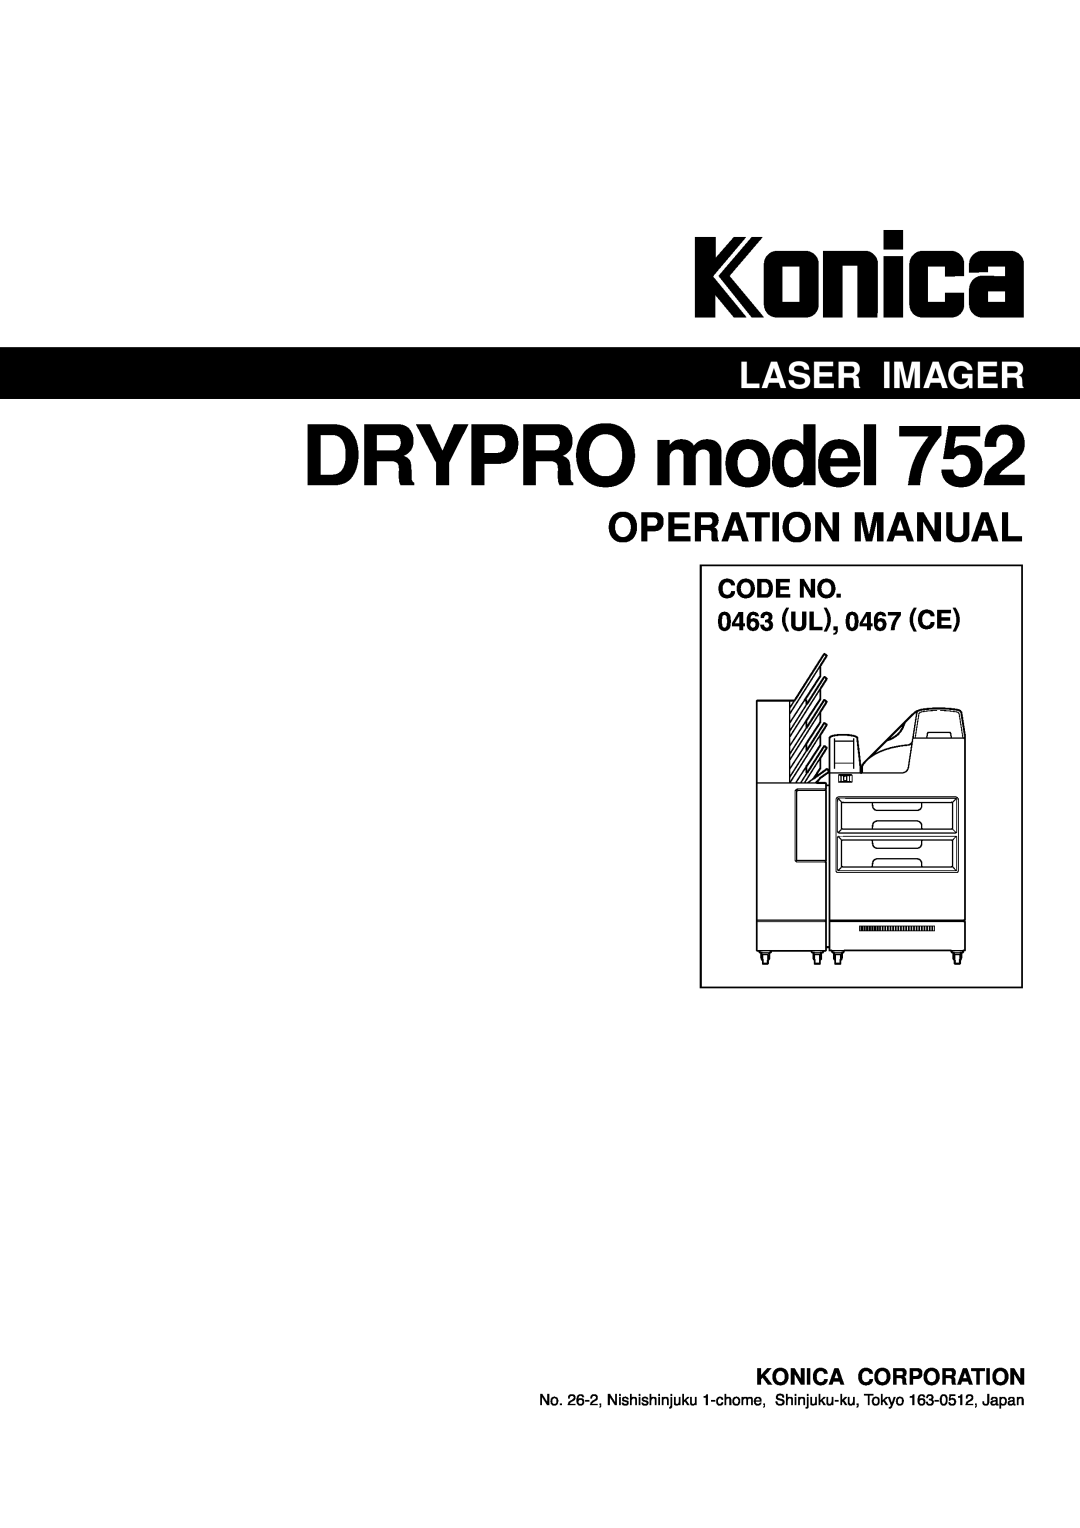 Konica Minolta 752 operation manual DRYPRO model, Laser Imager, CODE NO 0463 UL, 0467 CE, Konicacorporation 